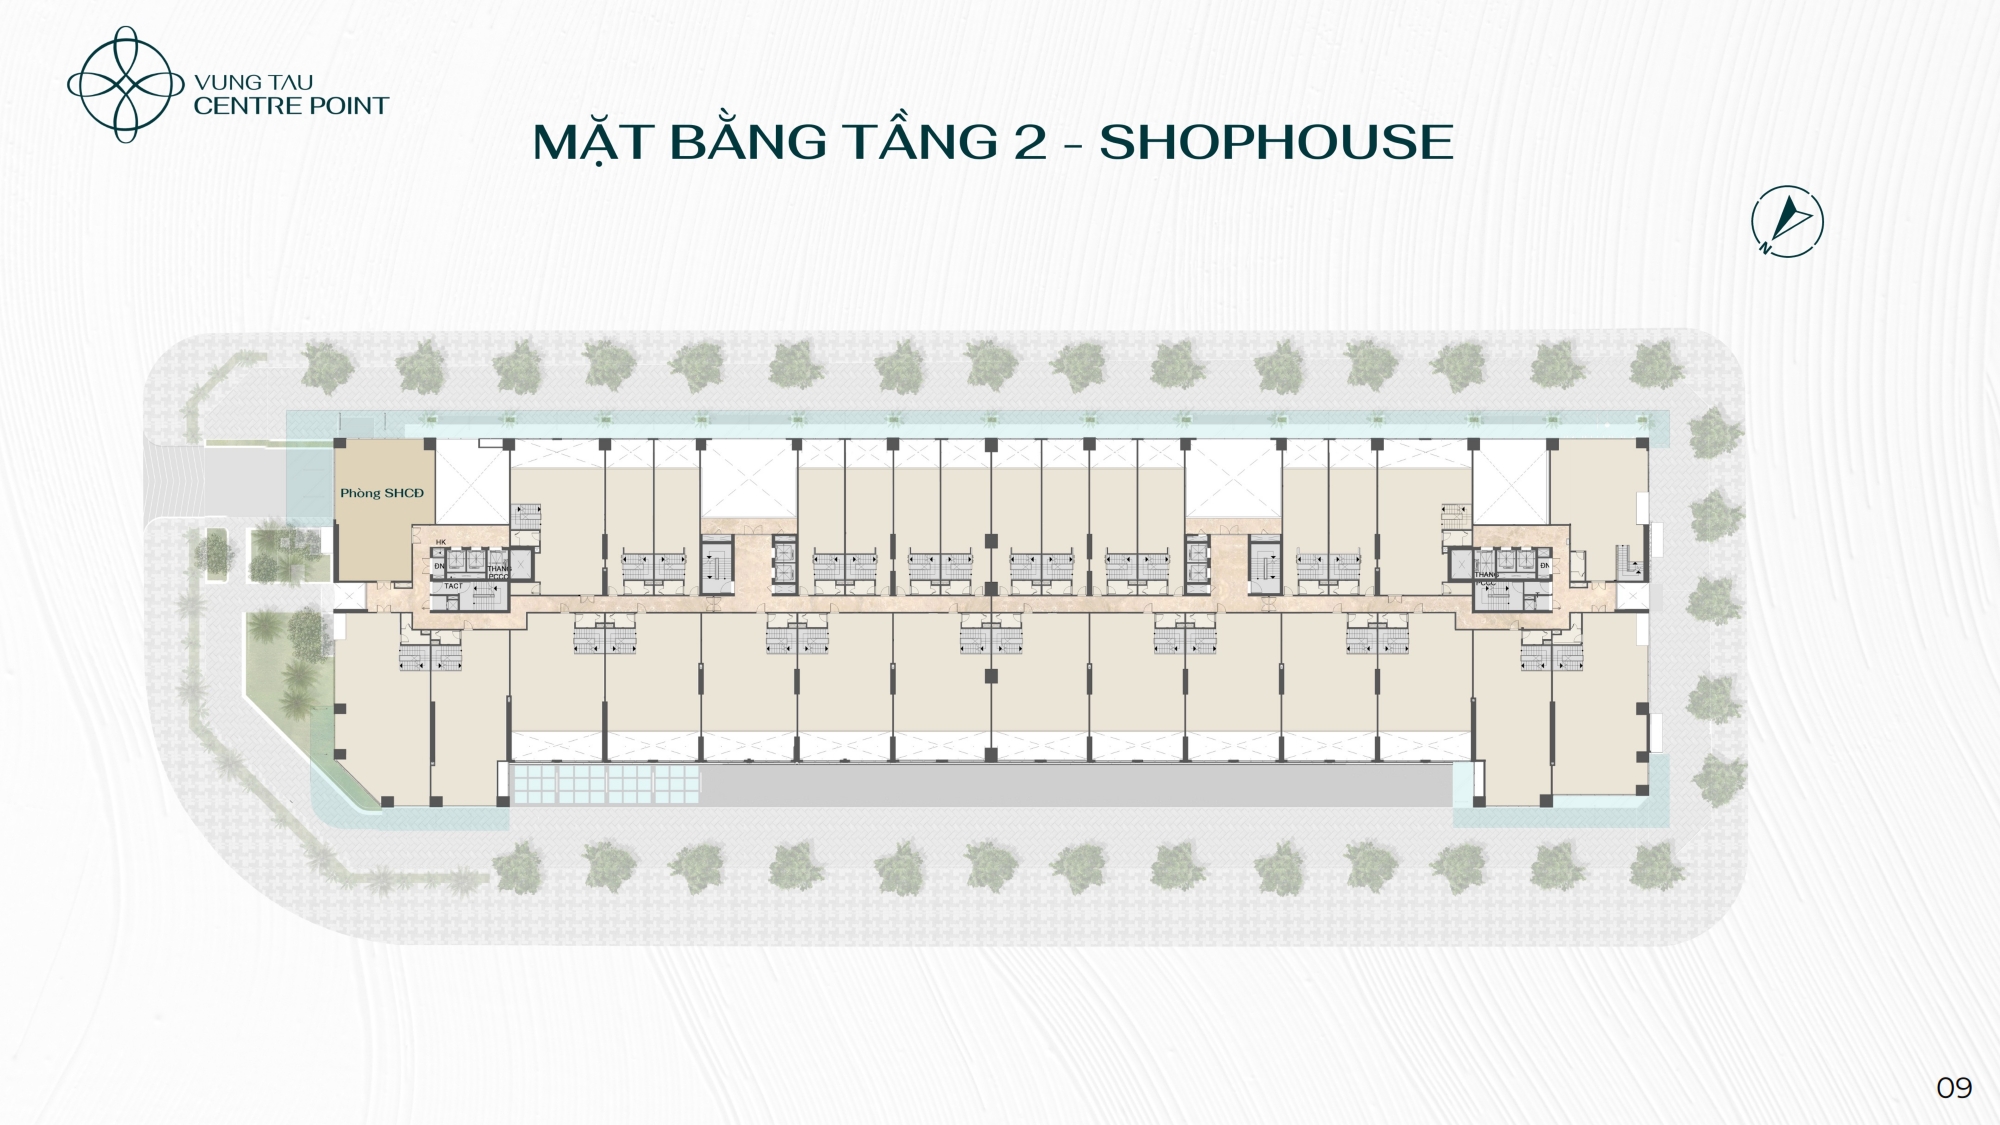 Mat bang Tang 2 Shophouse Vung Tau Centre Point - Vũng Tàu Centre Point